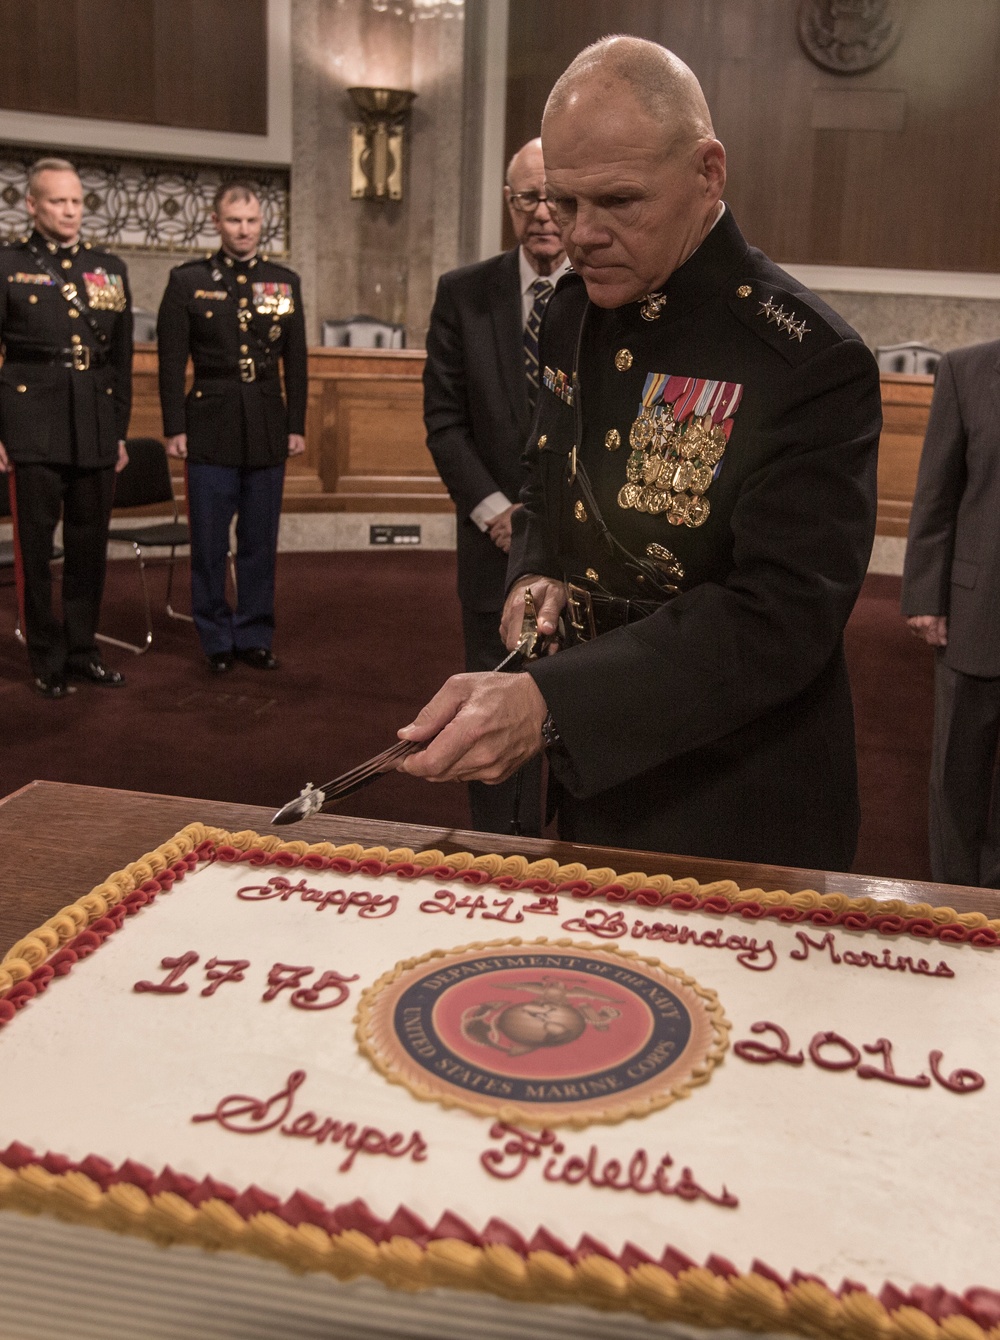 Senate Cake Cutting Ceremony